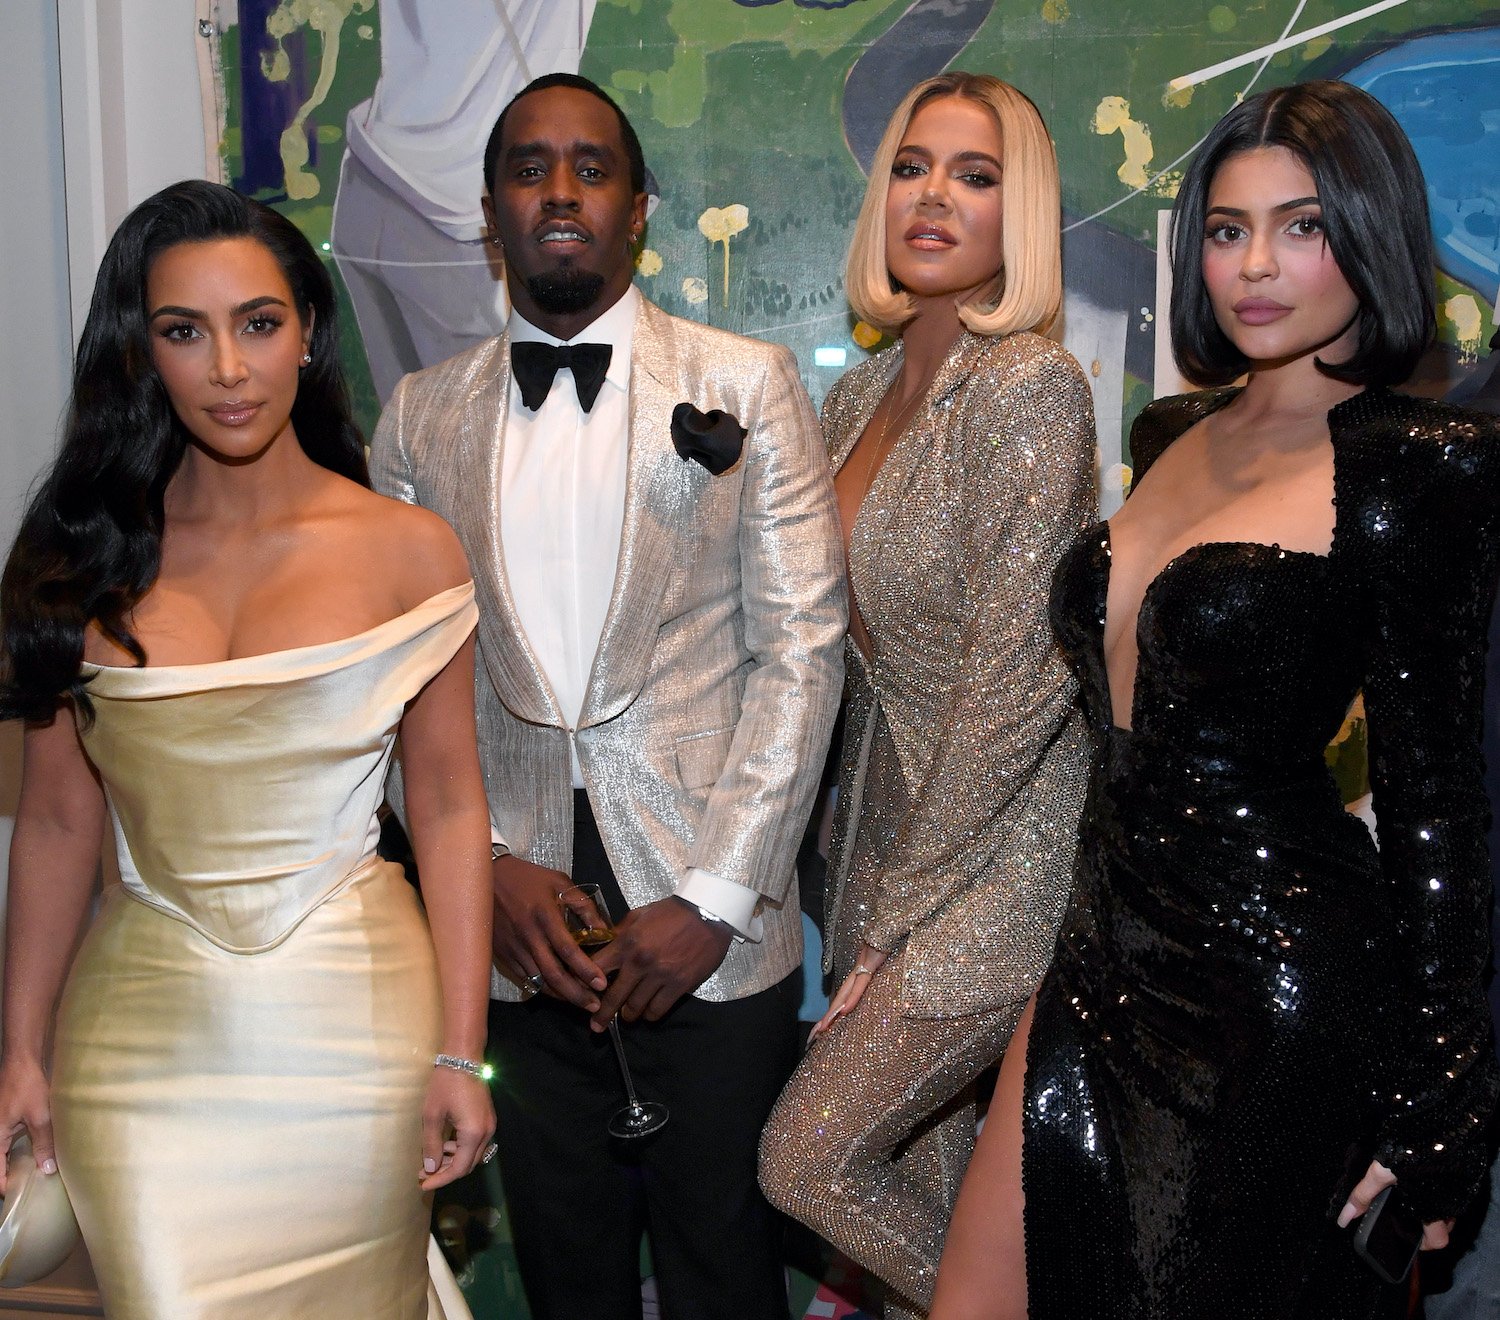 Kim Kardashian West, Sean Combs, Khloe Kardashian, and Kylie Jenner attend Sean Combs 50th Birthday Bash 2019 